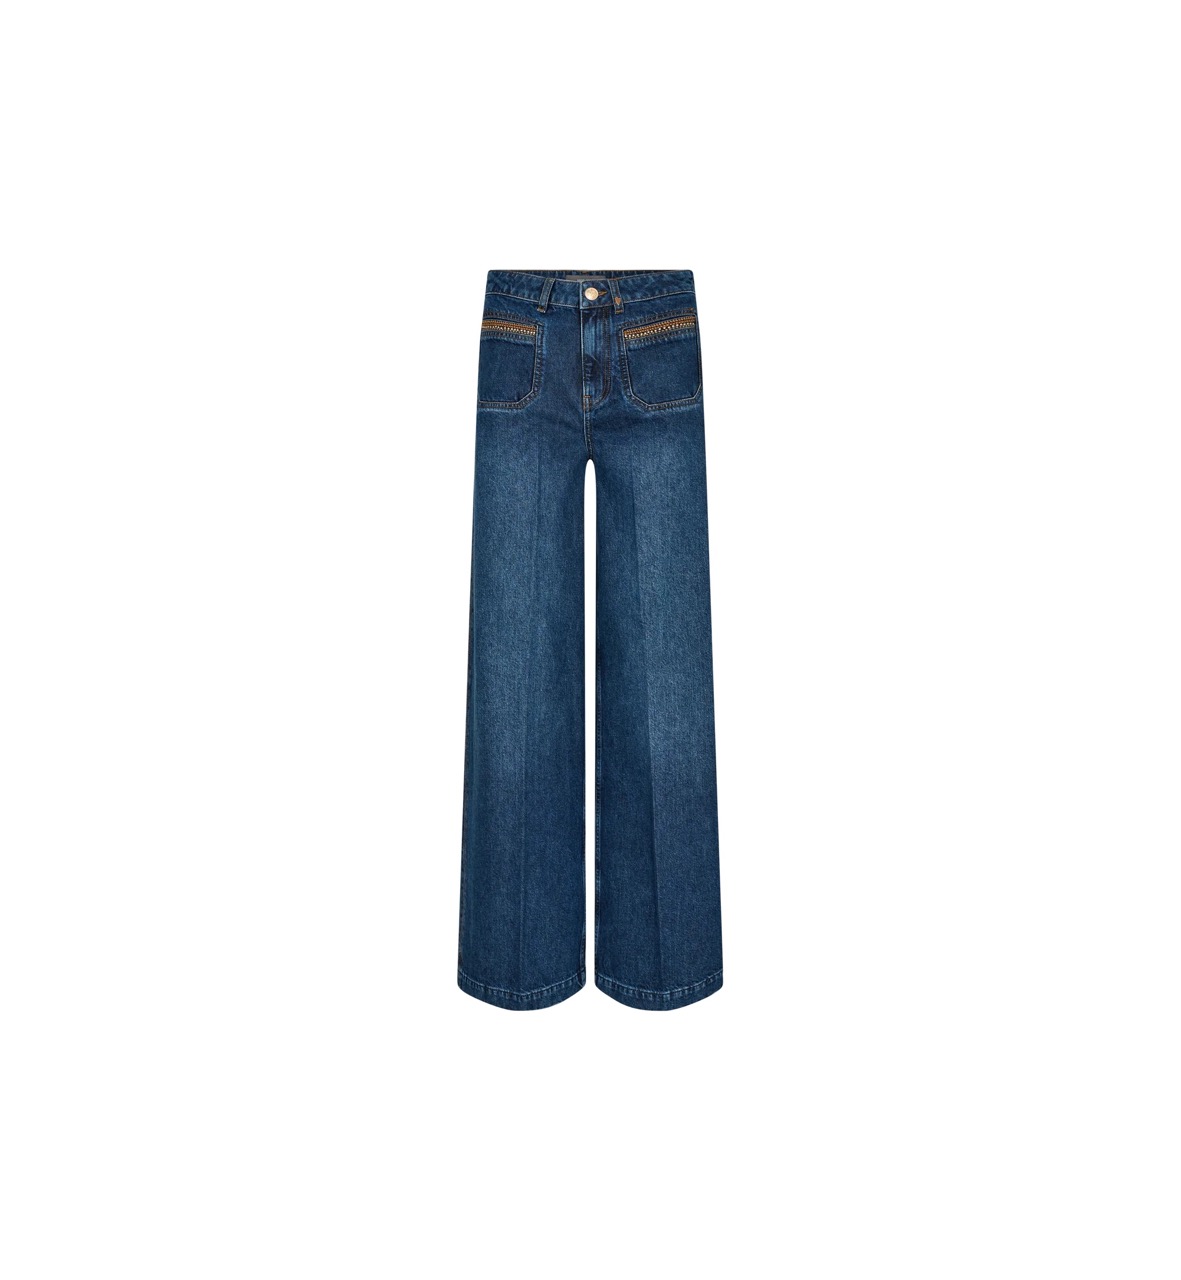 Blauwe dames broek Mos Mosh - Colette sassy jeans